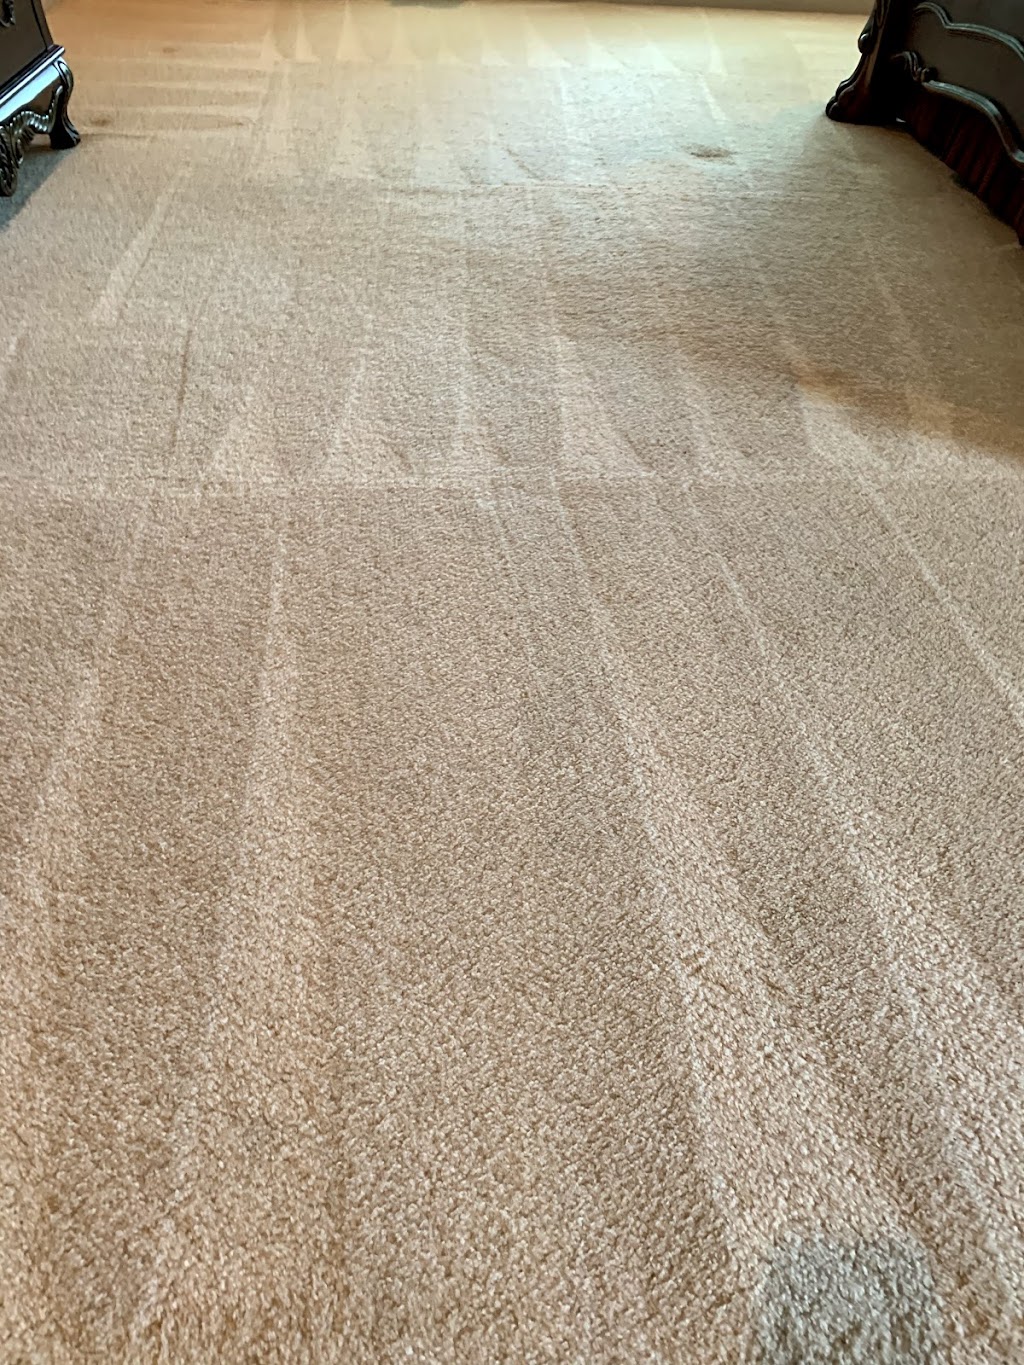 Cherrys Carpet Cleaning | 5725 Bethlehem Rd, Springfield, TN 37172, USA | Phone: (615) 382-8020